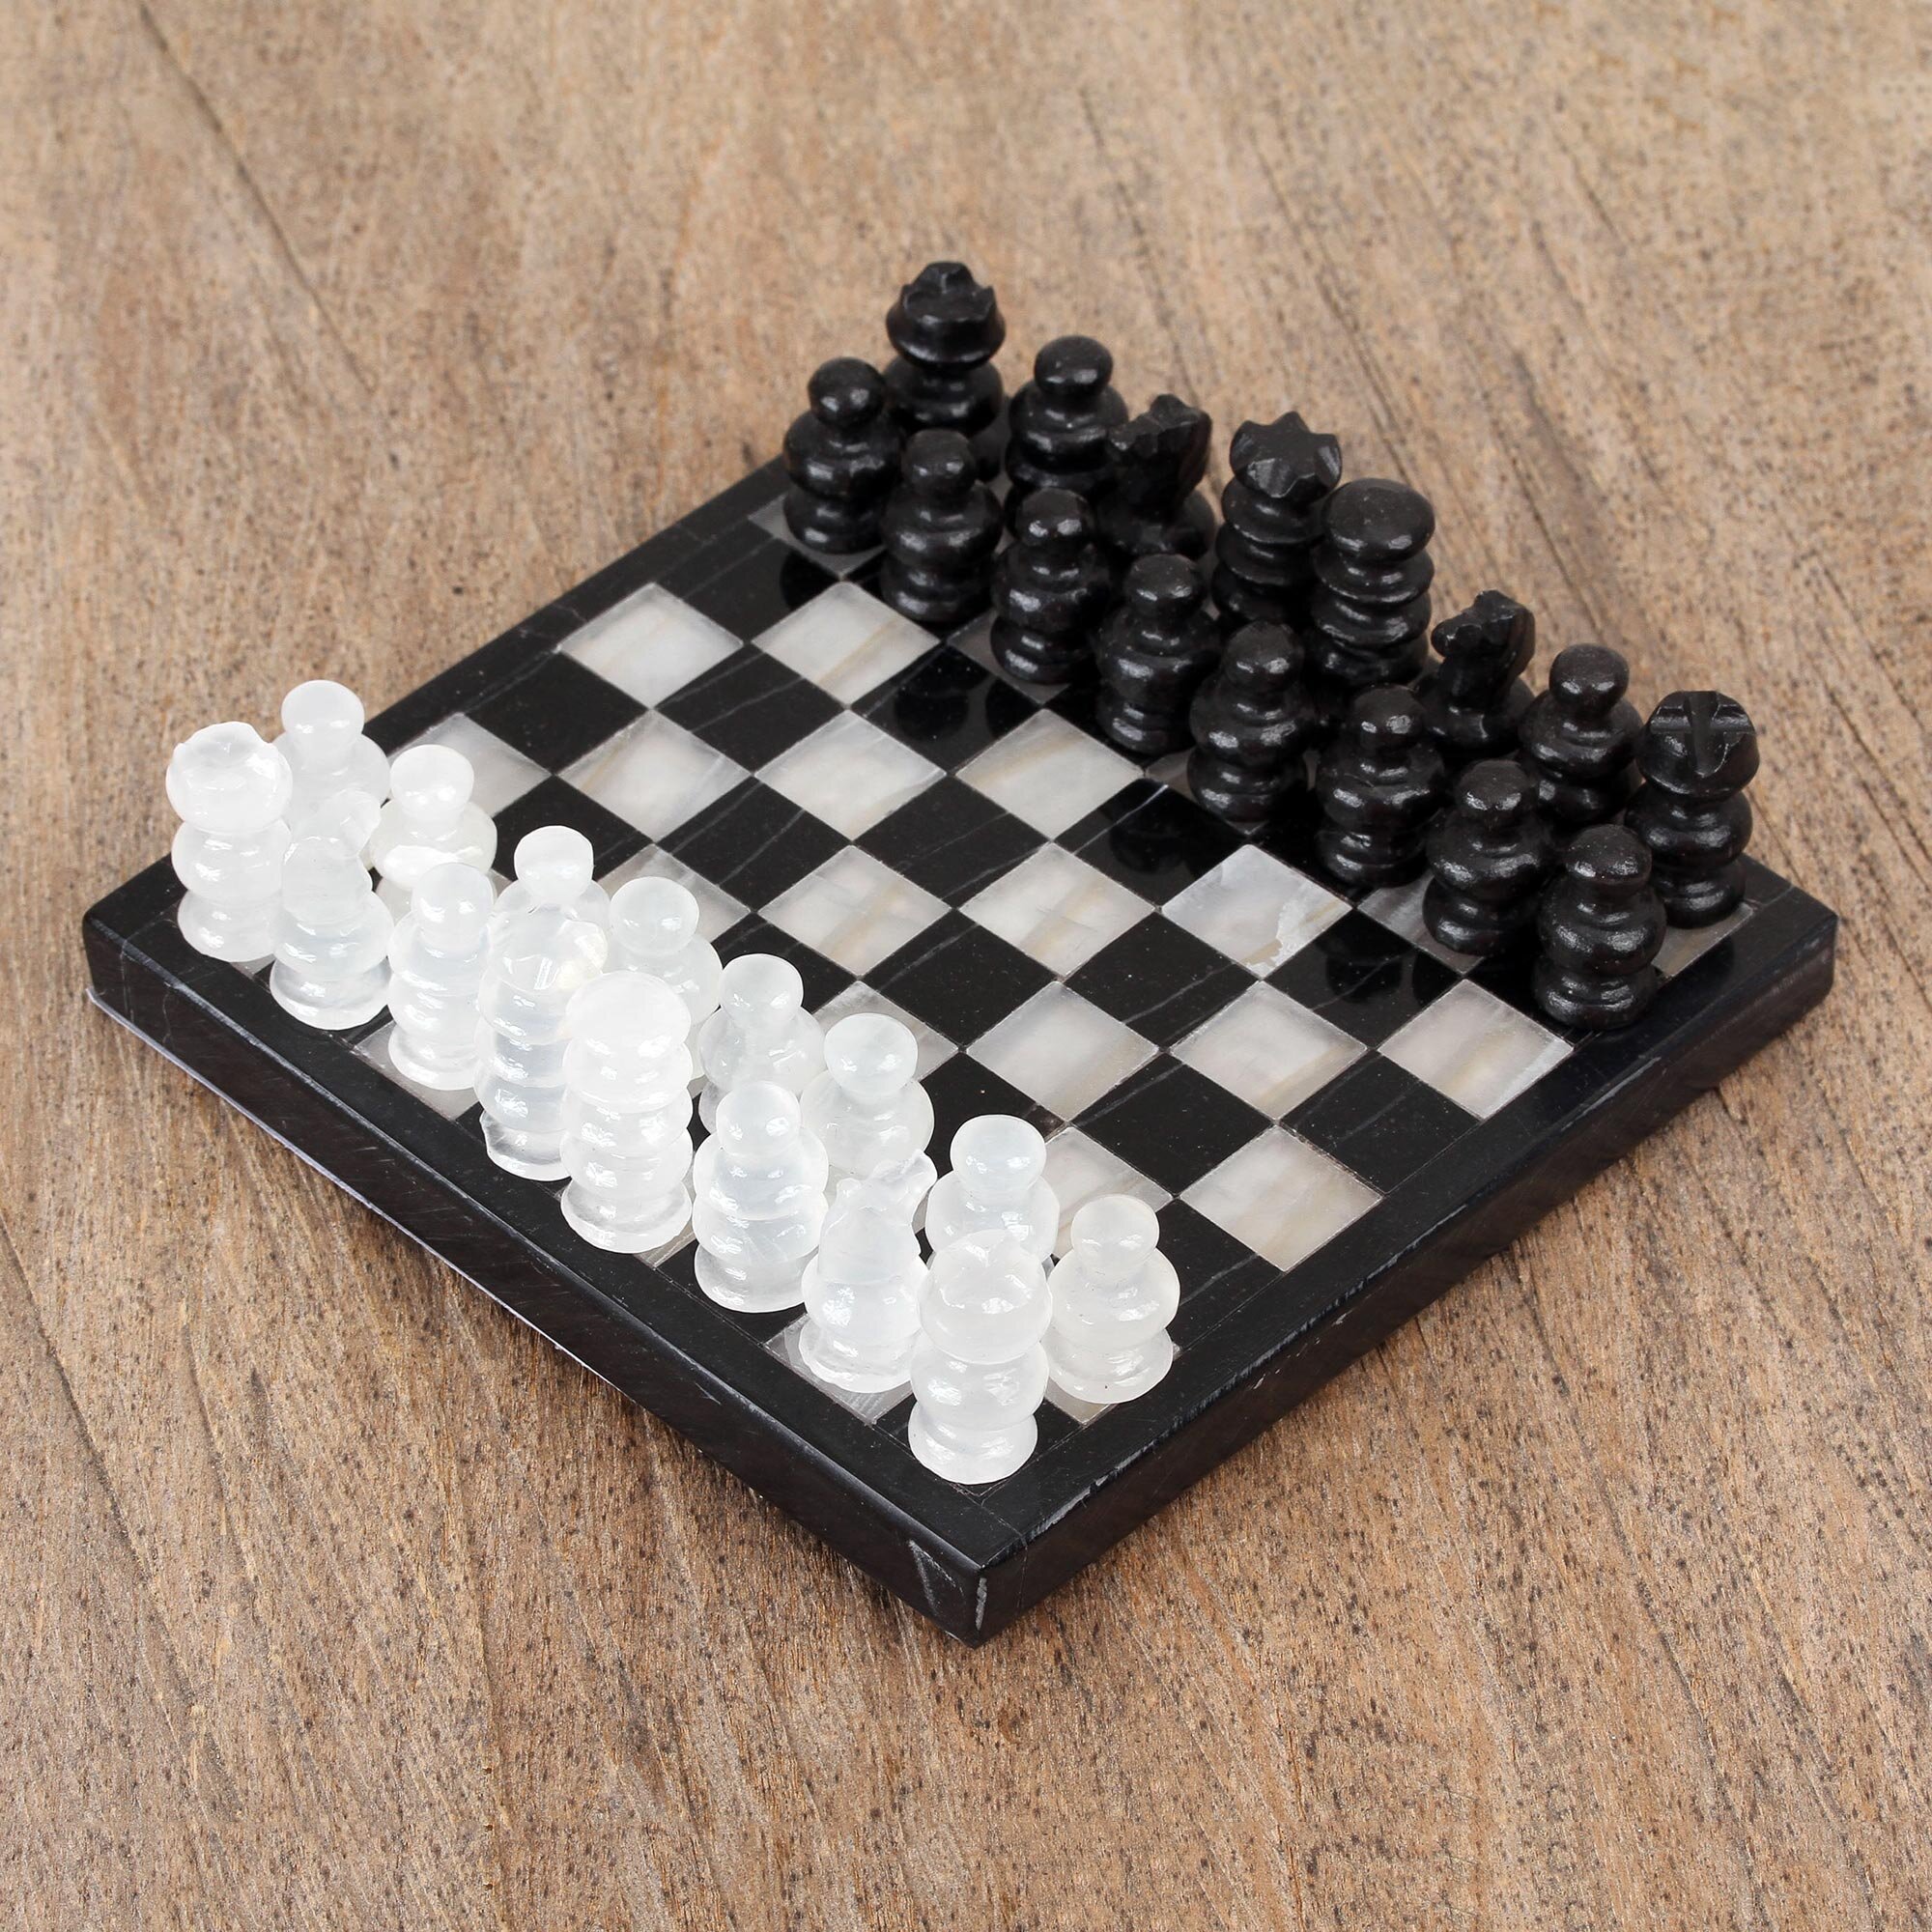 Bey-Berk Chess Set